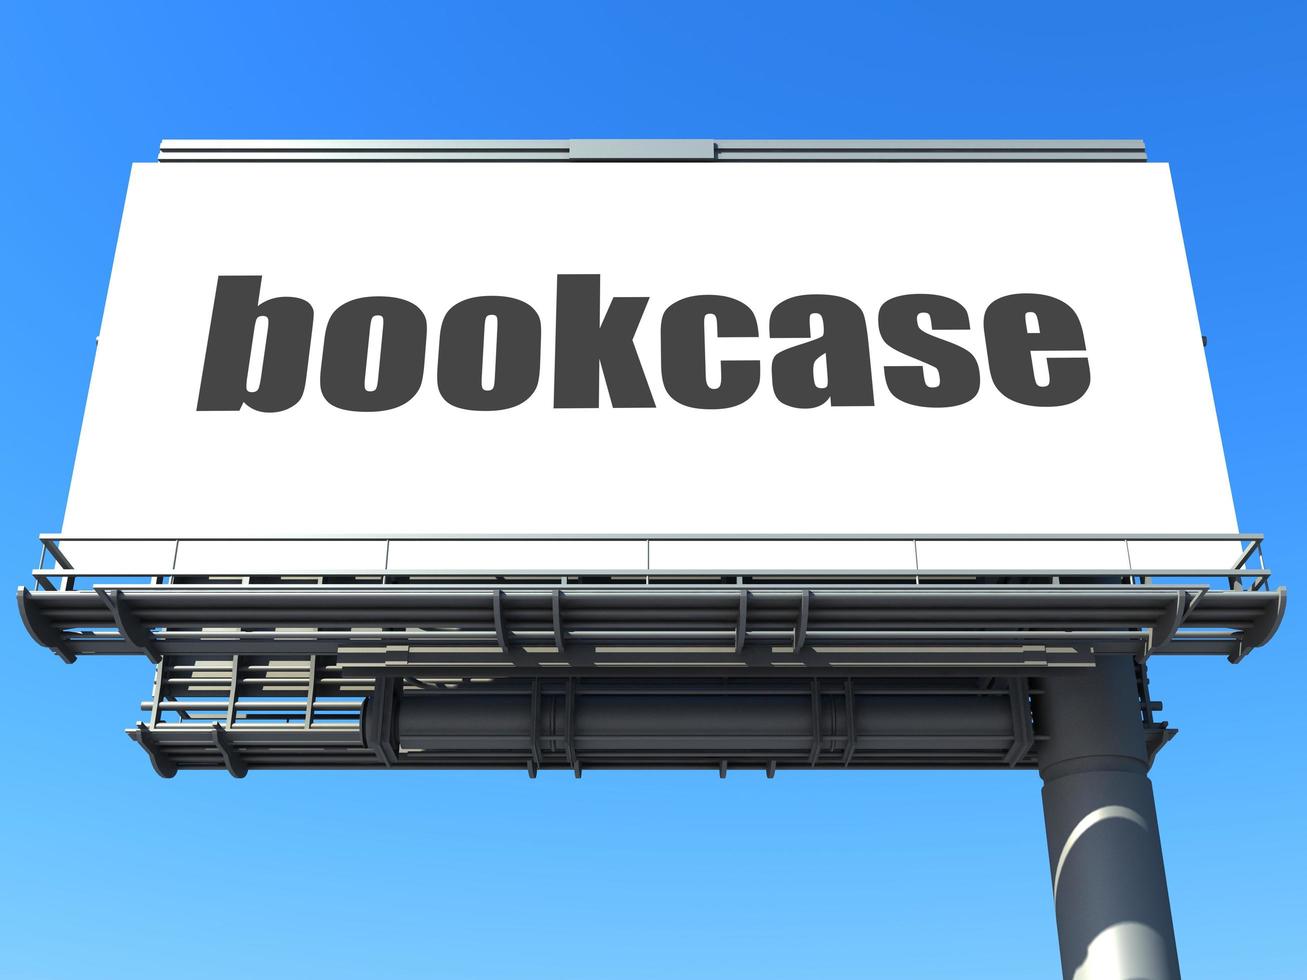 bookcase word on billboard photo